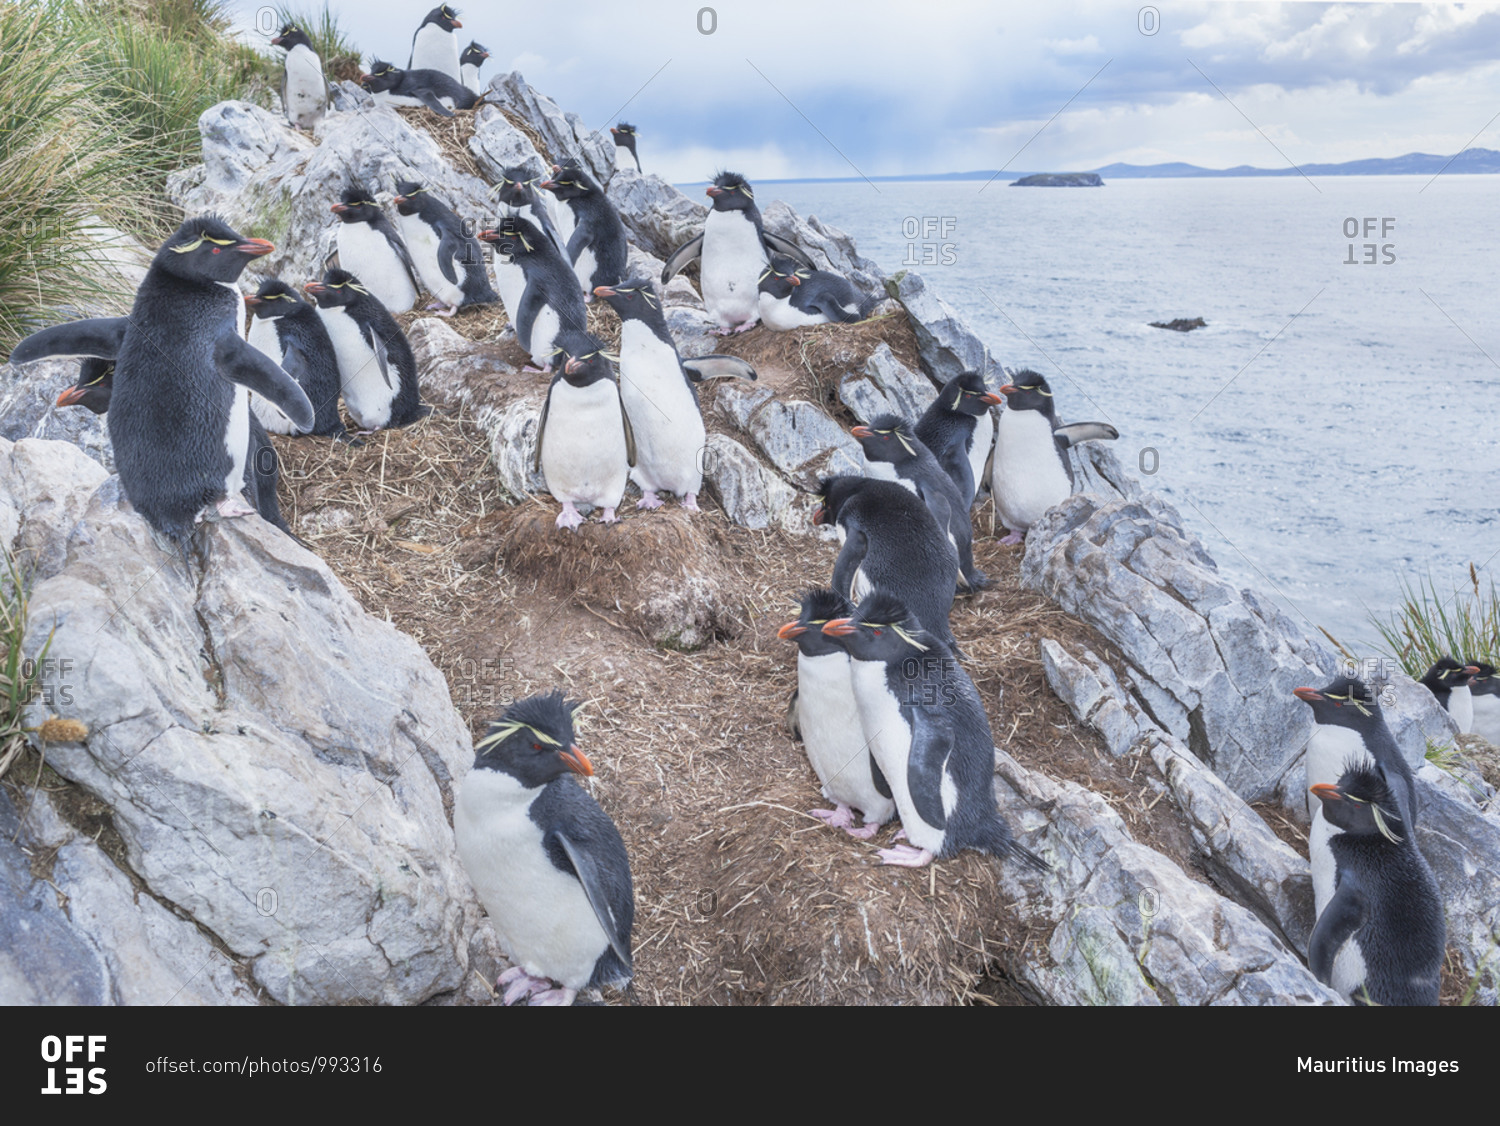 Group of rockhopper penguins (Eudyptes chrysocome chrysocome) on a rocky islet, East Falkland, Falkland Islands, South America